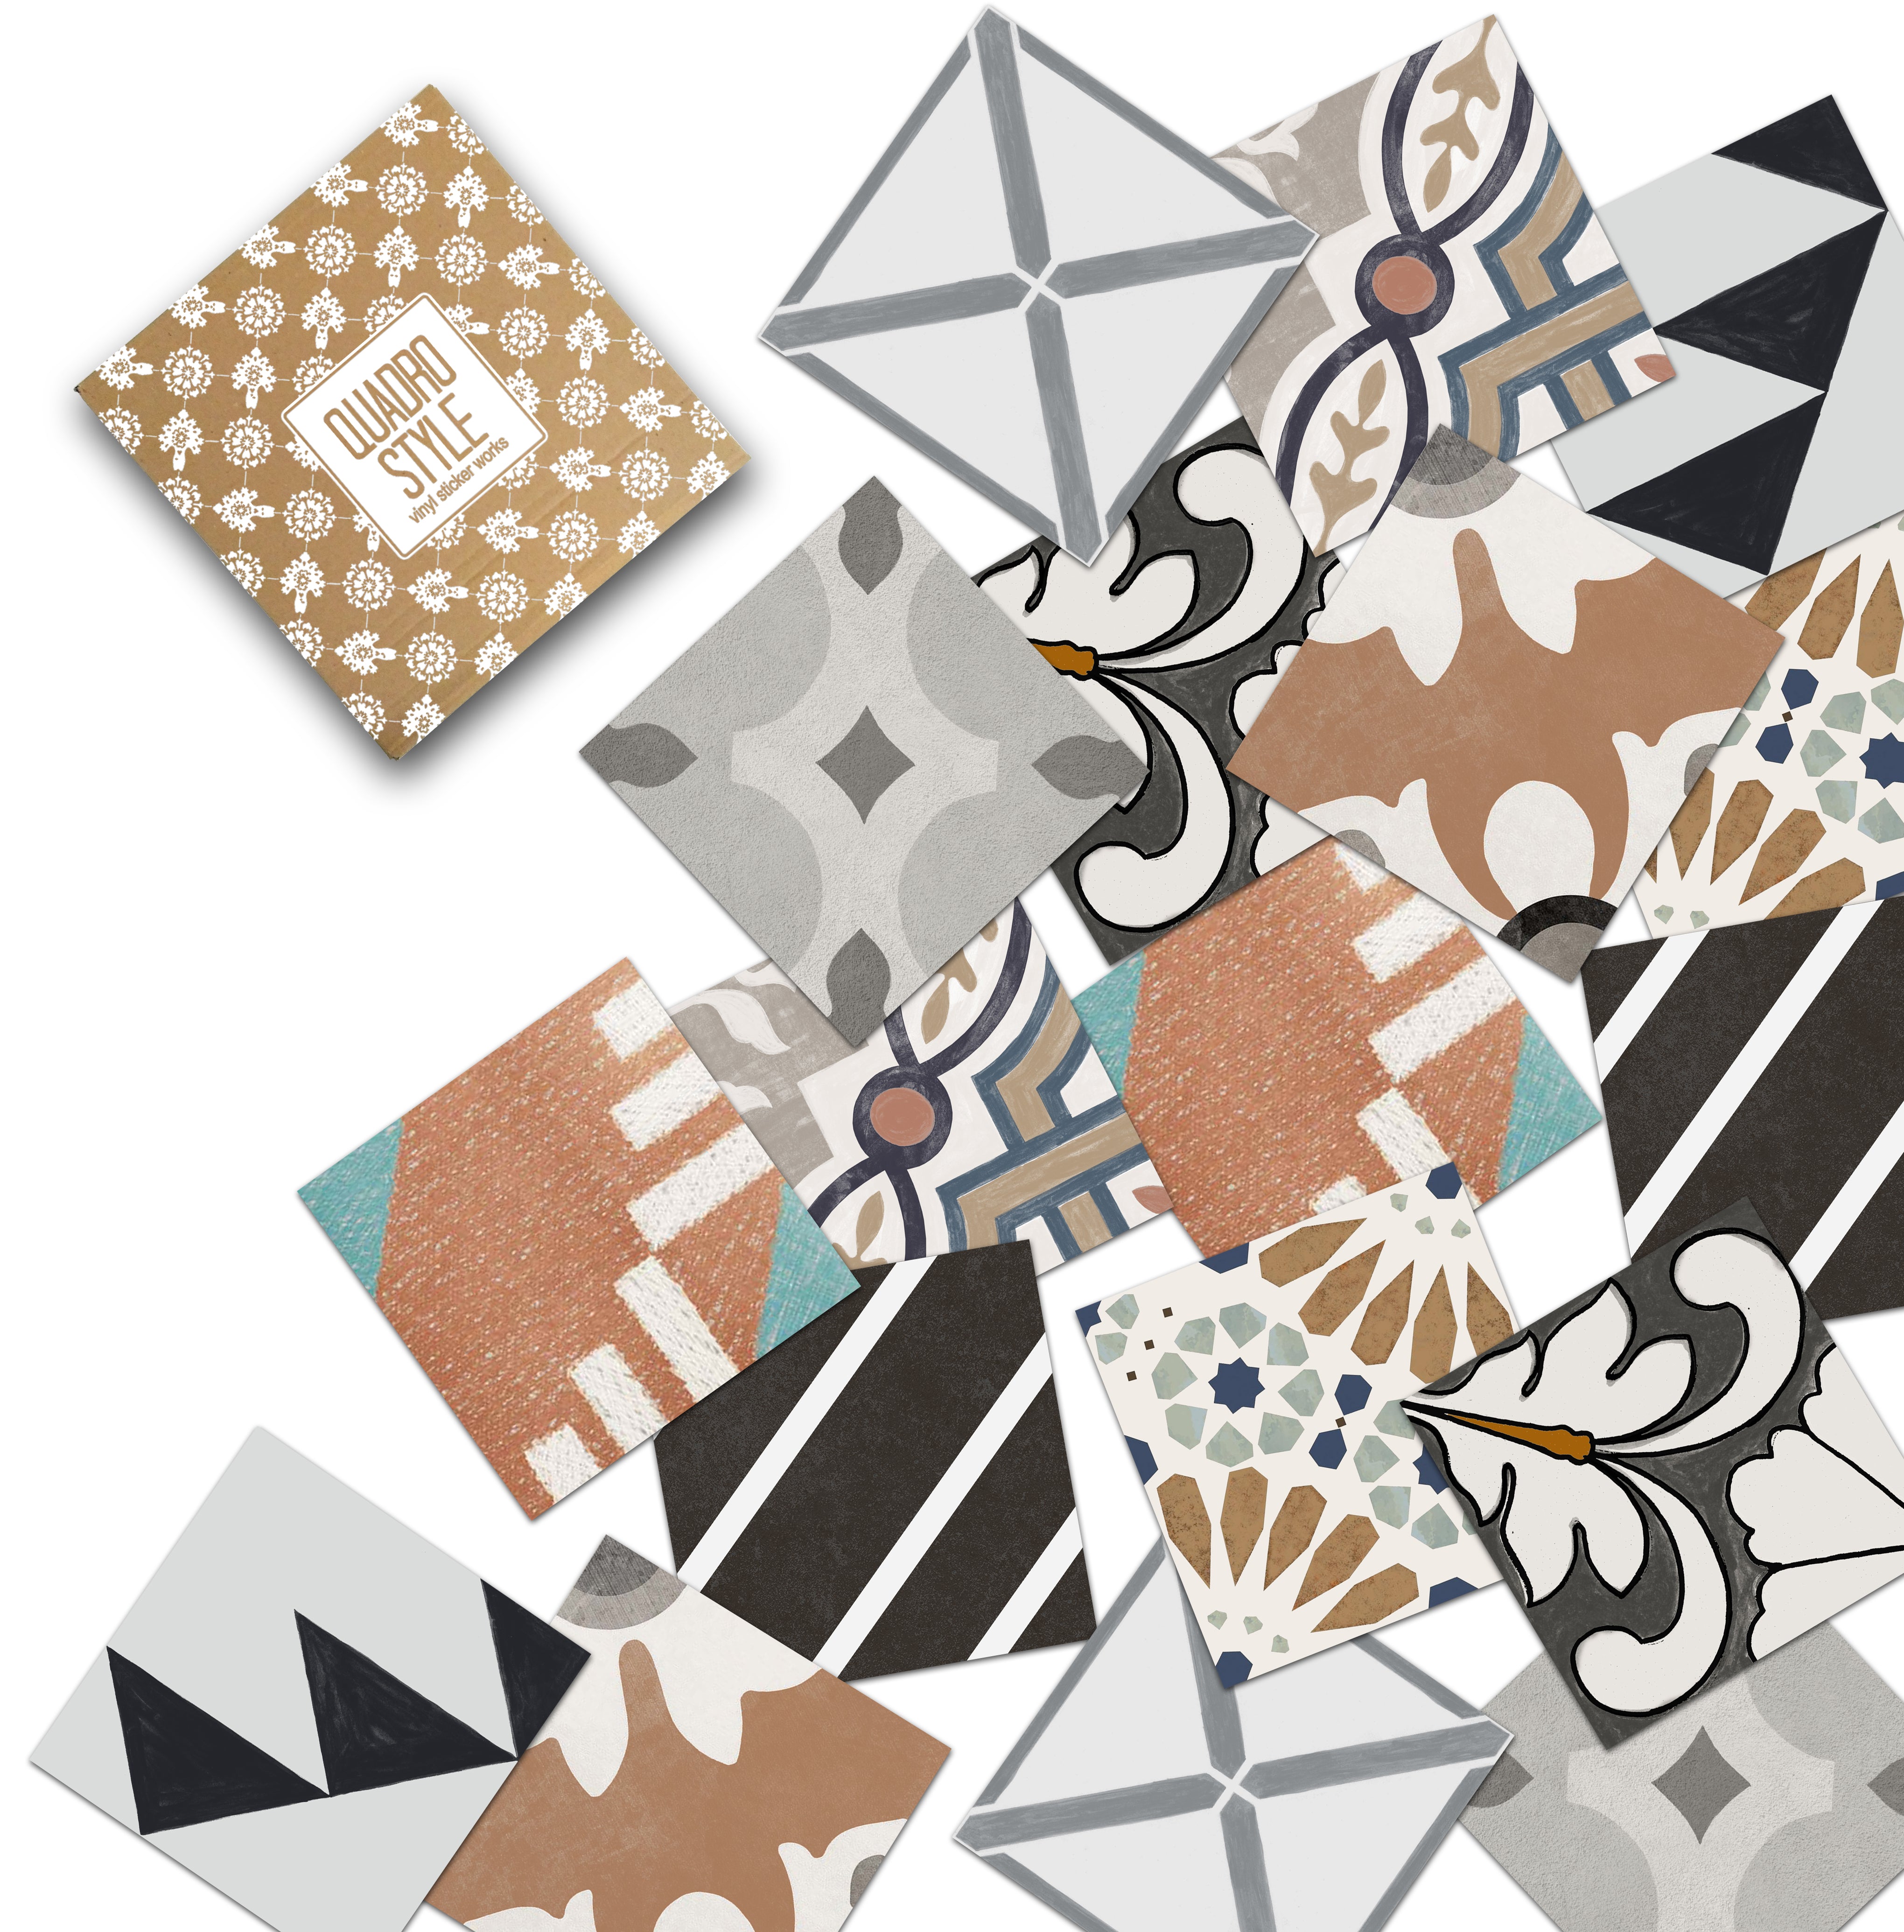 Quadrostyle 24 Best-sellers Tile Sticker Sampler Gift Set Inc. Free Shipping  